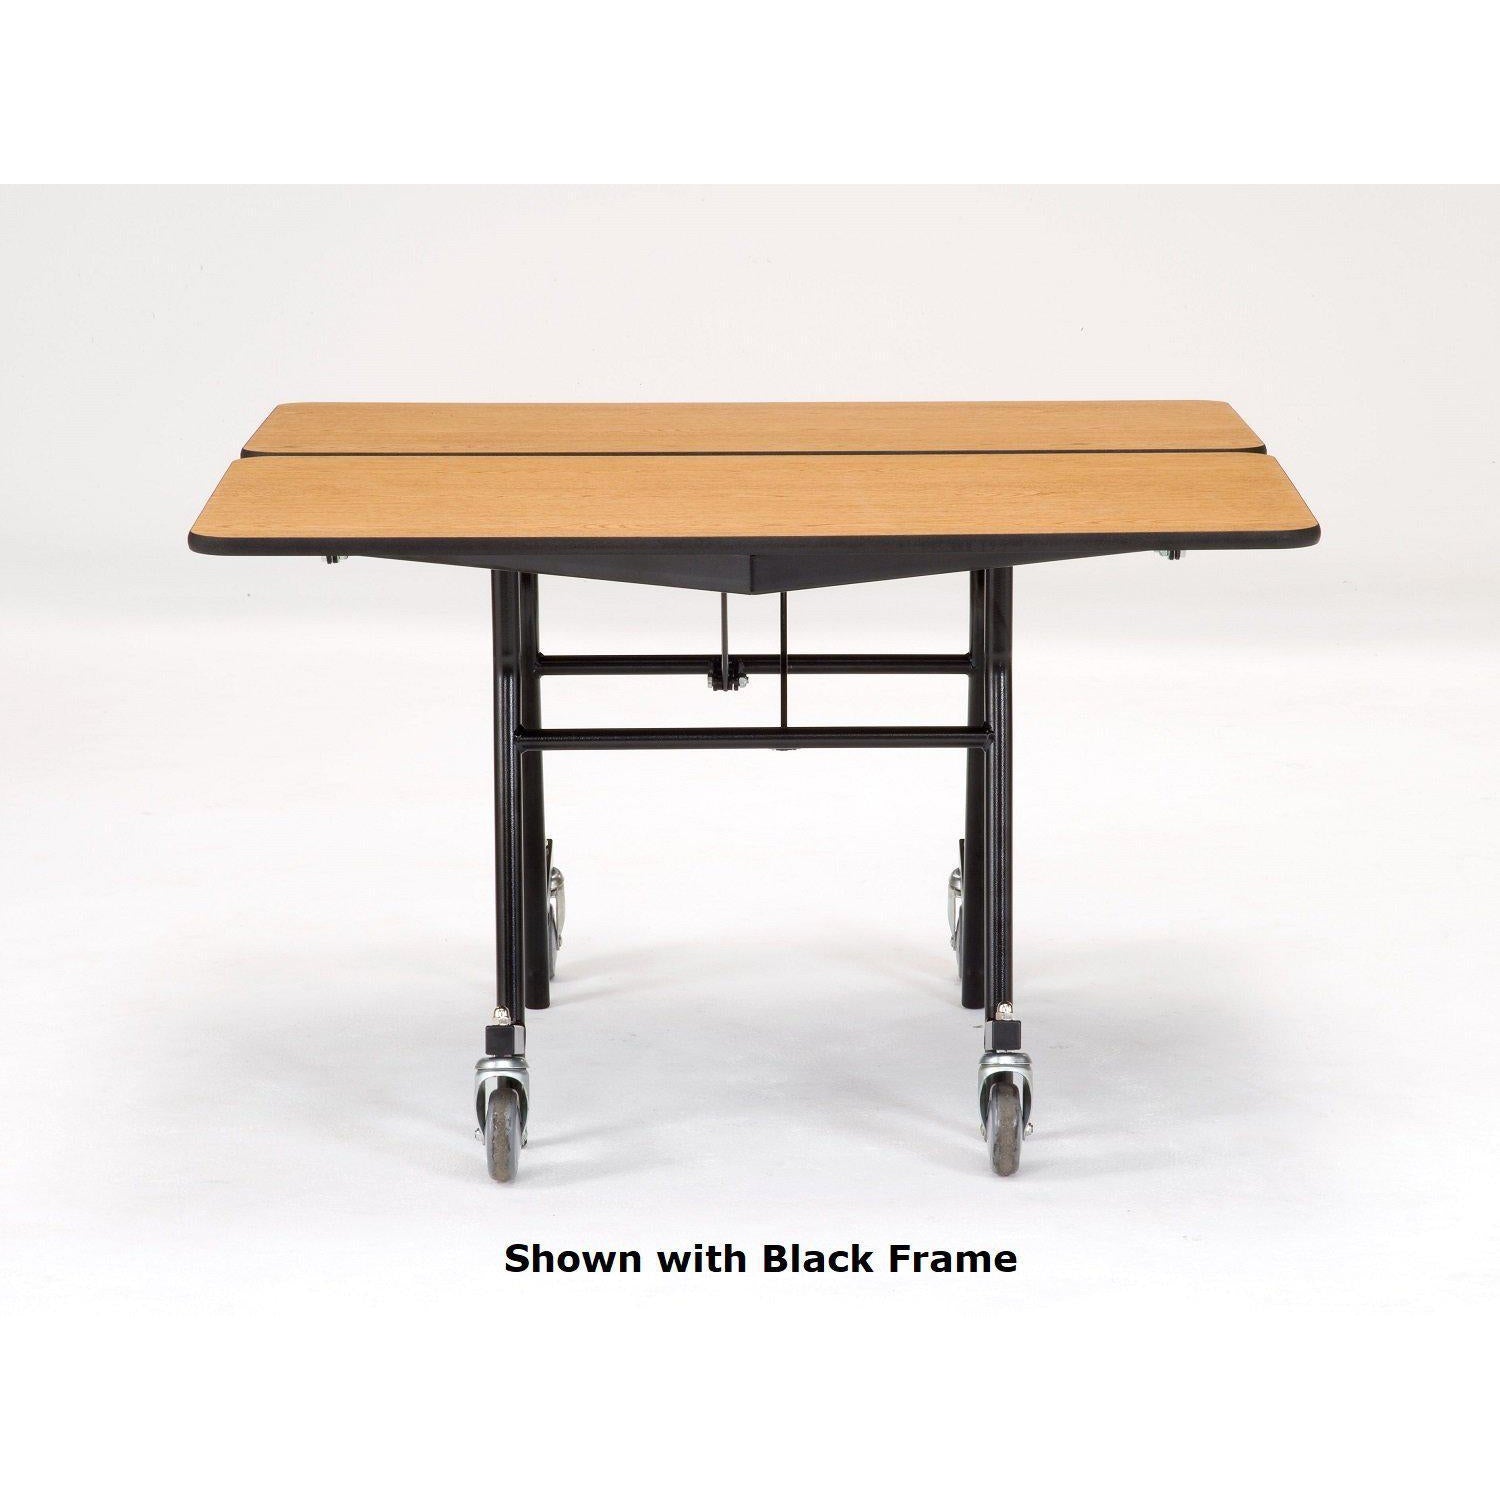 Mobile Shape Cafeteria Table, 48" Square, Plywood Core, Vinyl T-Mold Edge, Chrome Frame